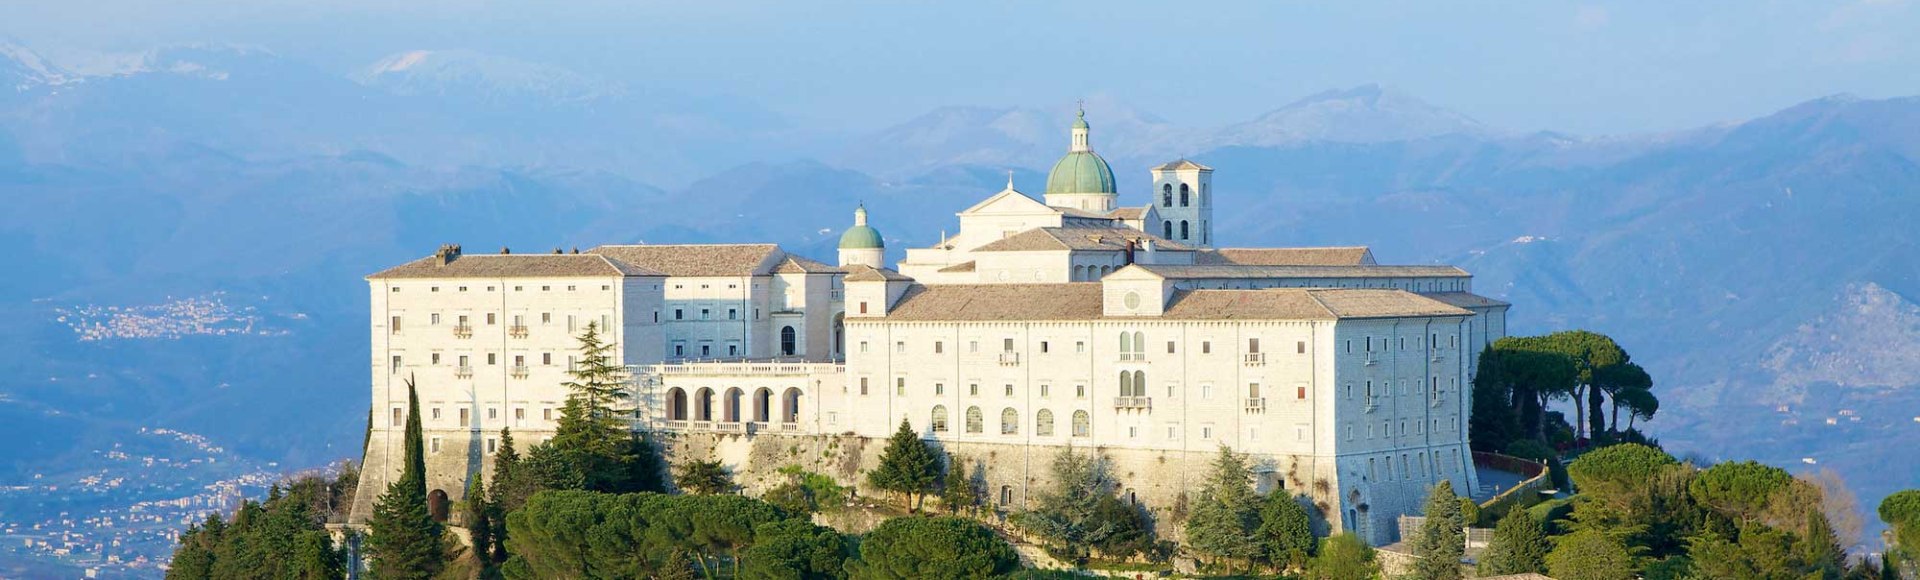 Kloster Montecassino, Italien, © kenzo - Fotolia.com